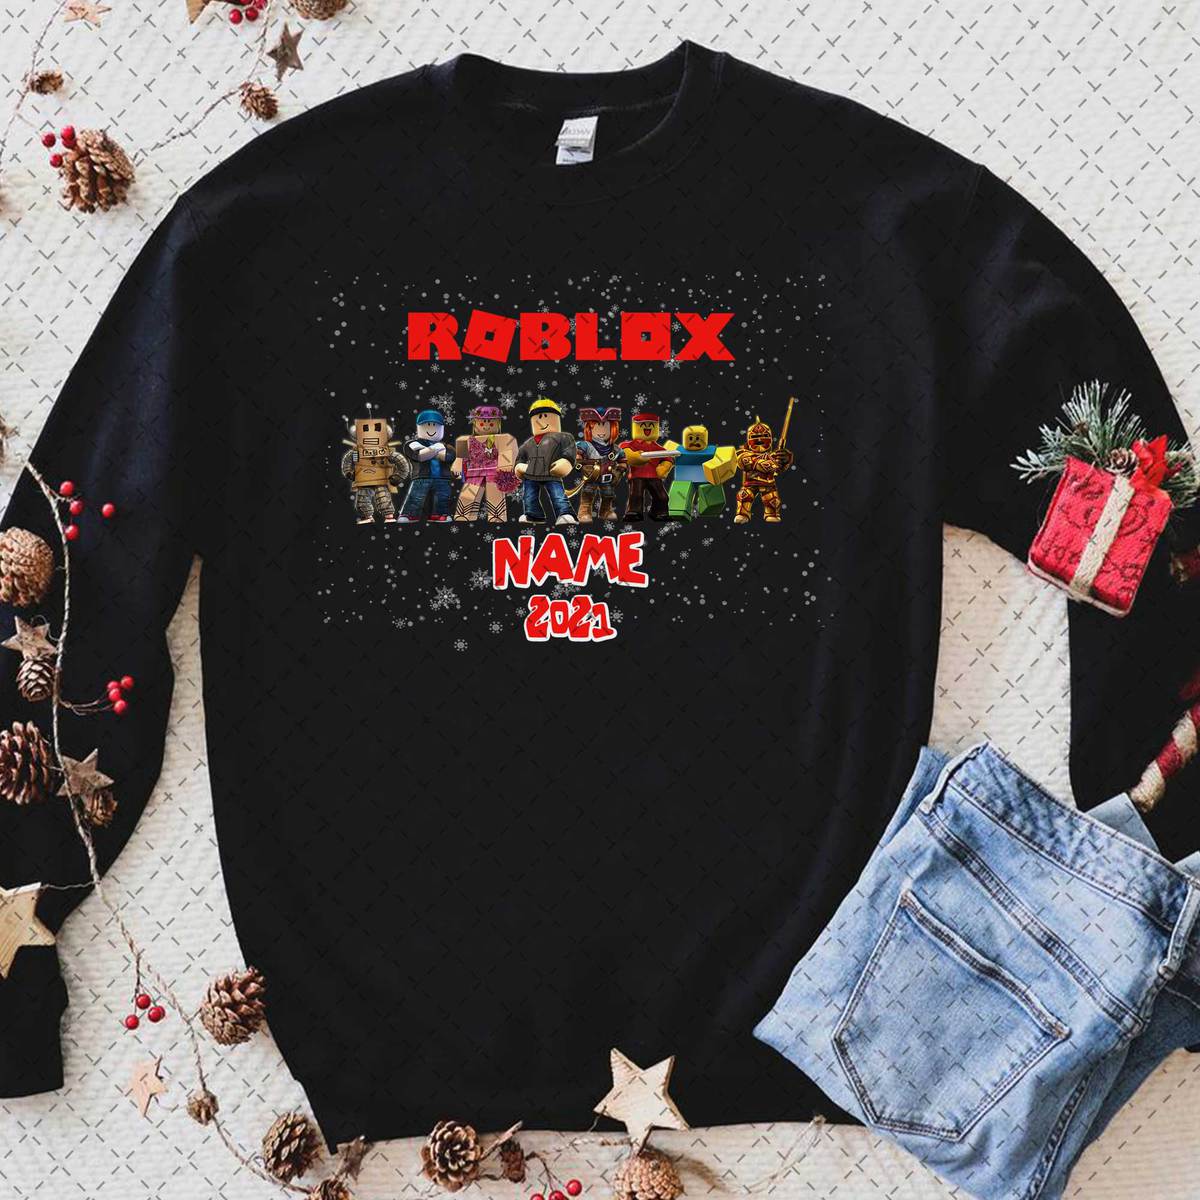 Roblox Christmas Shirt, Roblox Birthday Shirt, Roblox Shirt, Christmas Family Shirt, Christmas Gifts, Personalized Name Age, kids xmas gift